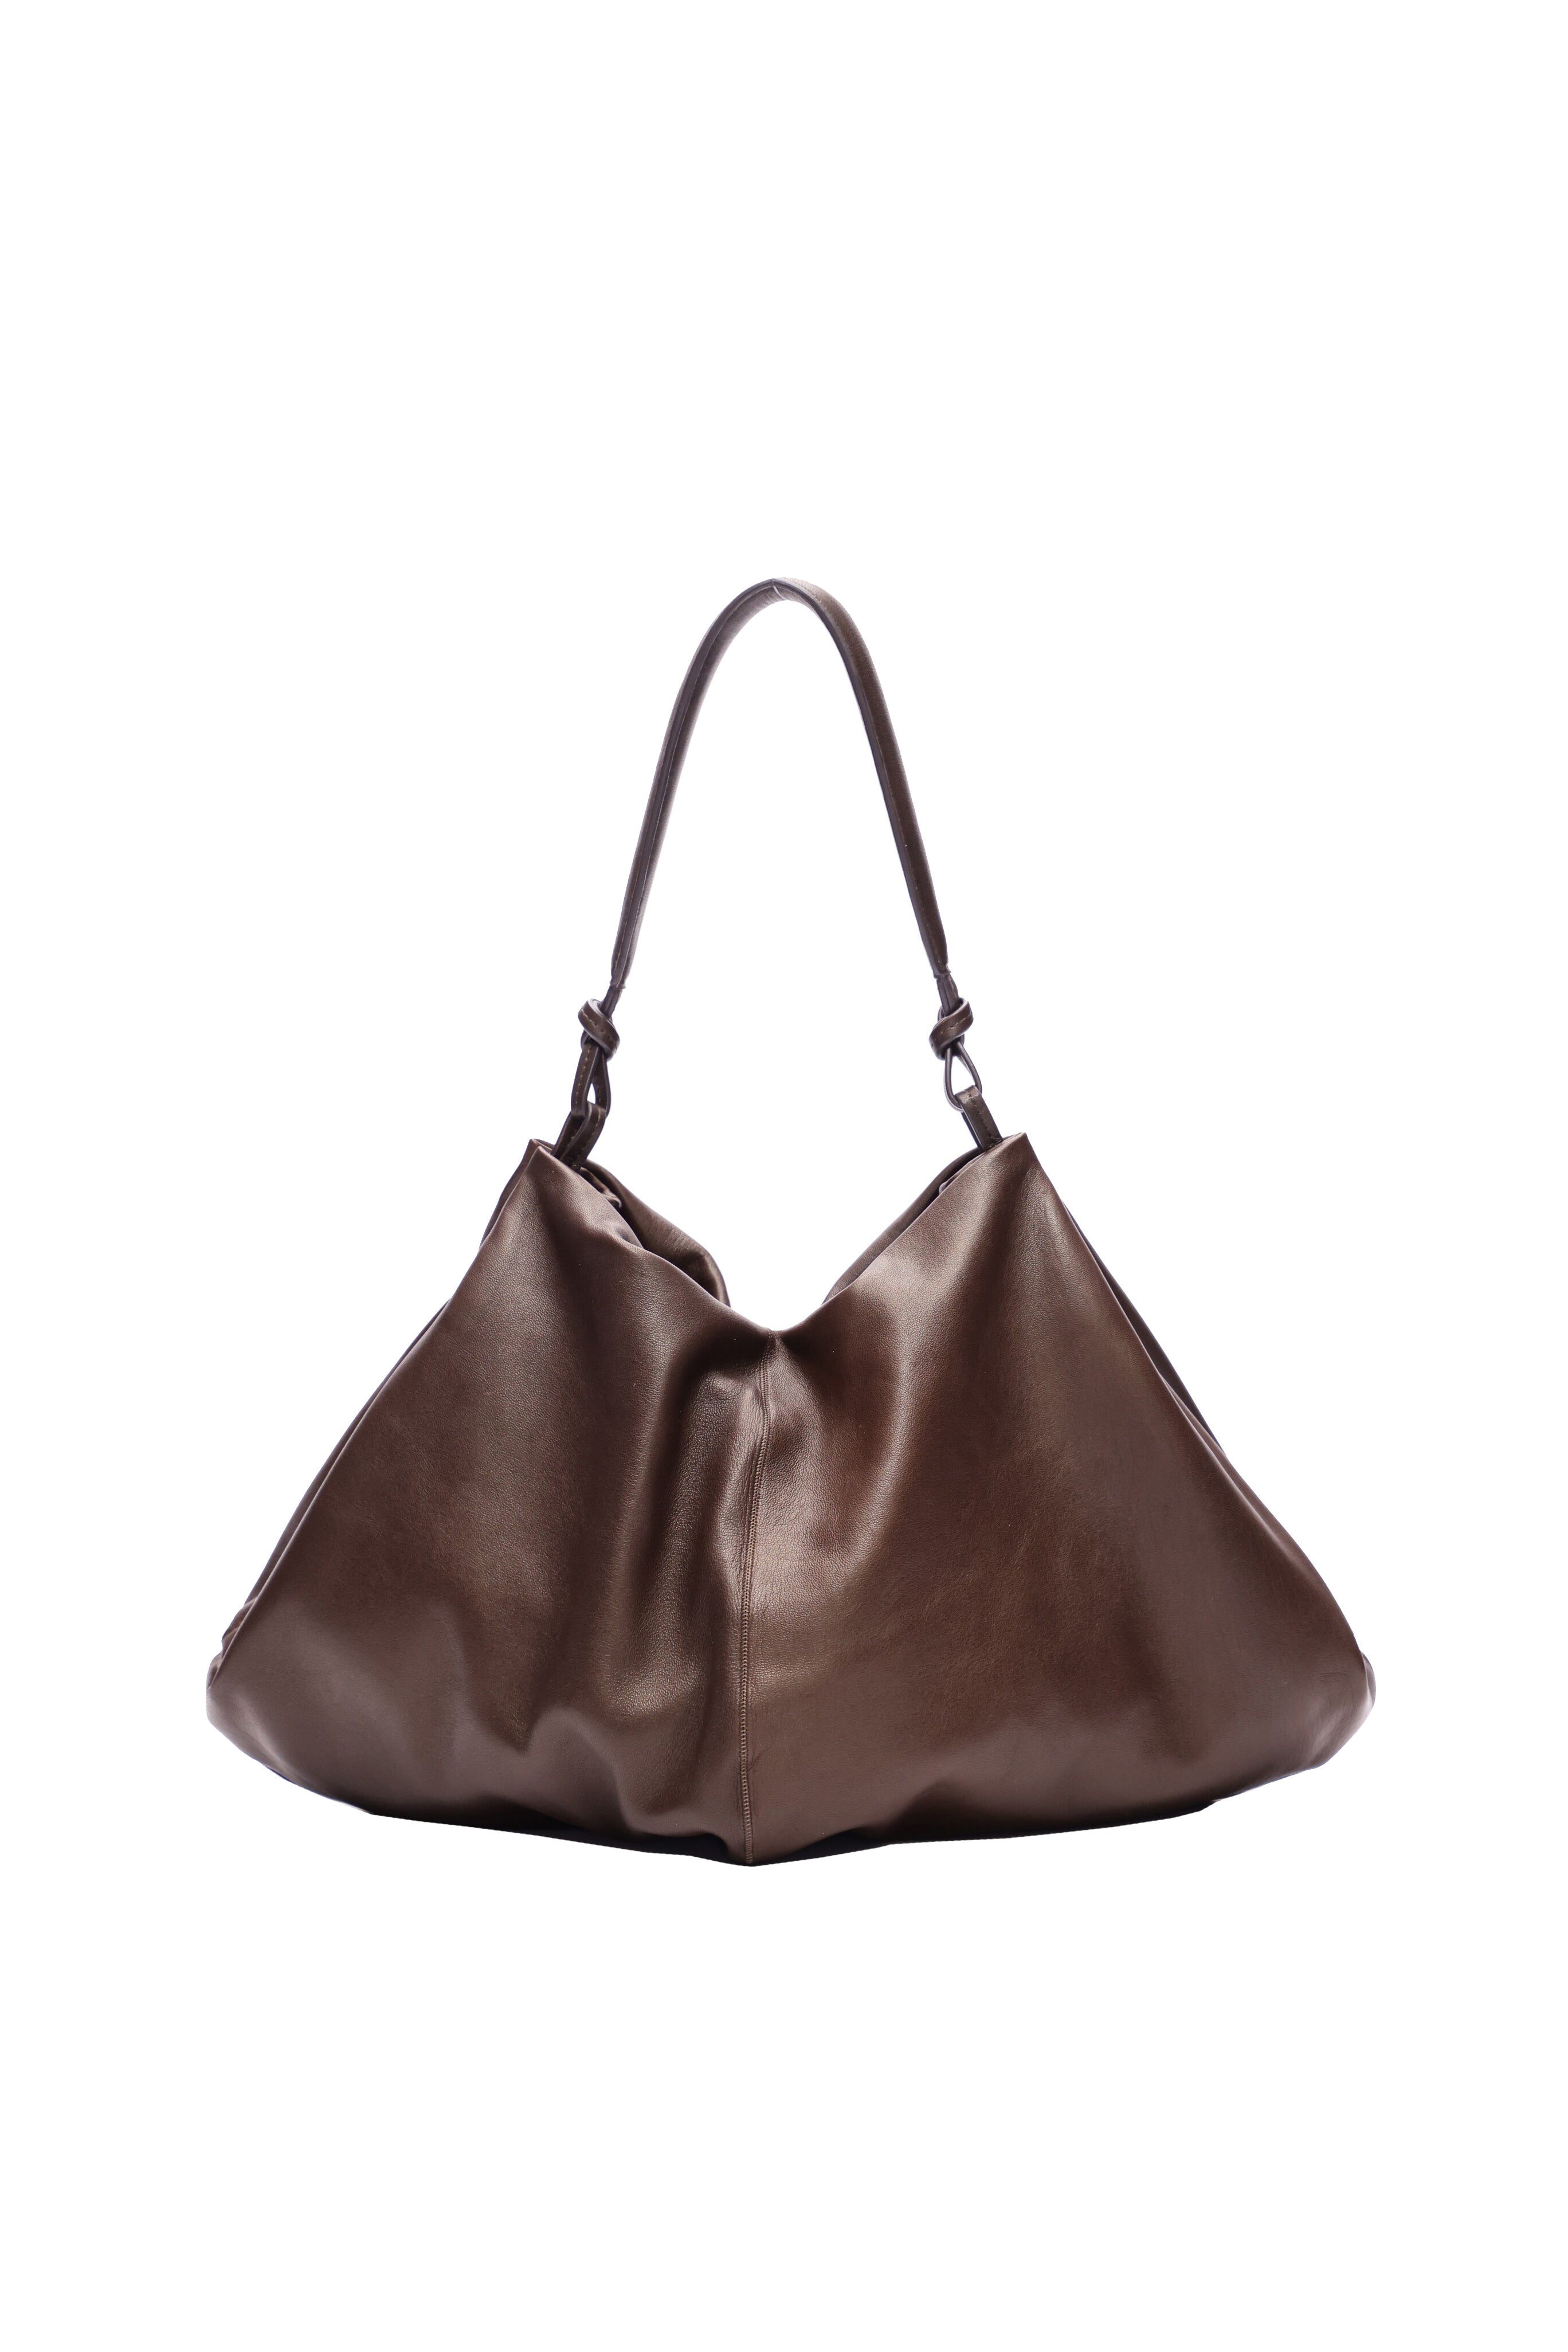 THE ROW Samia Leather Handbag